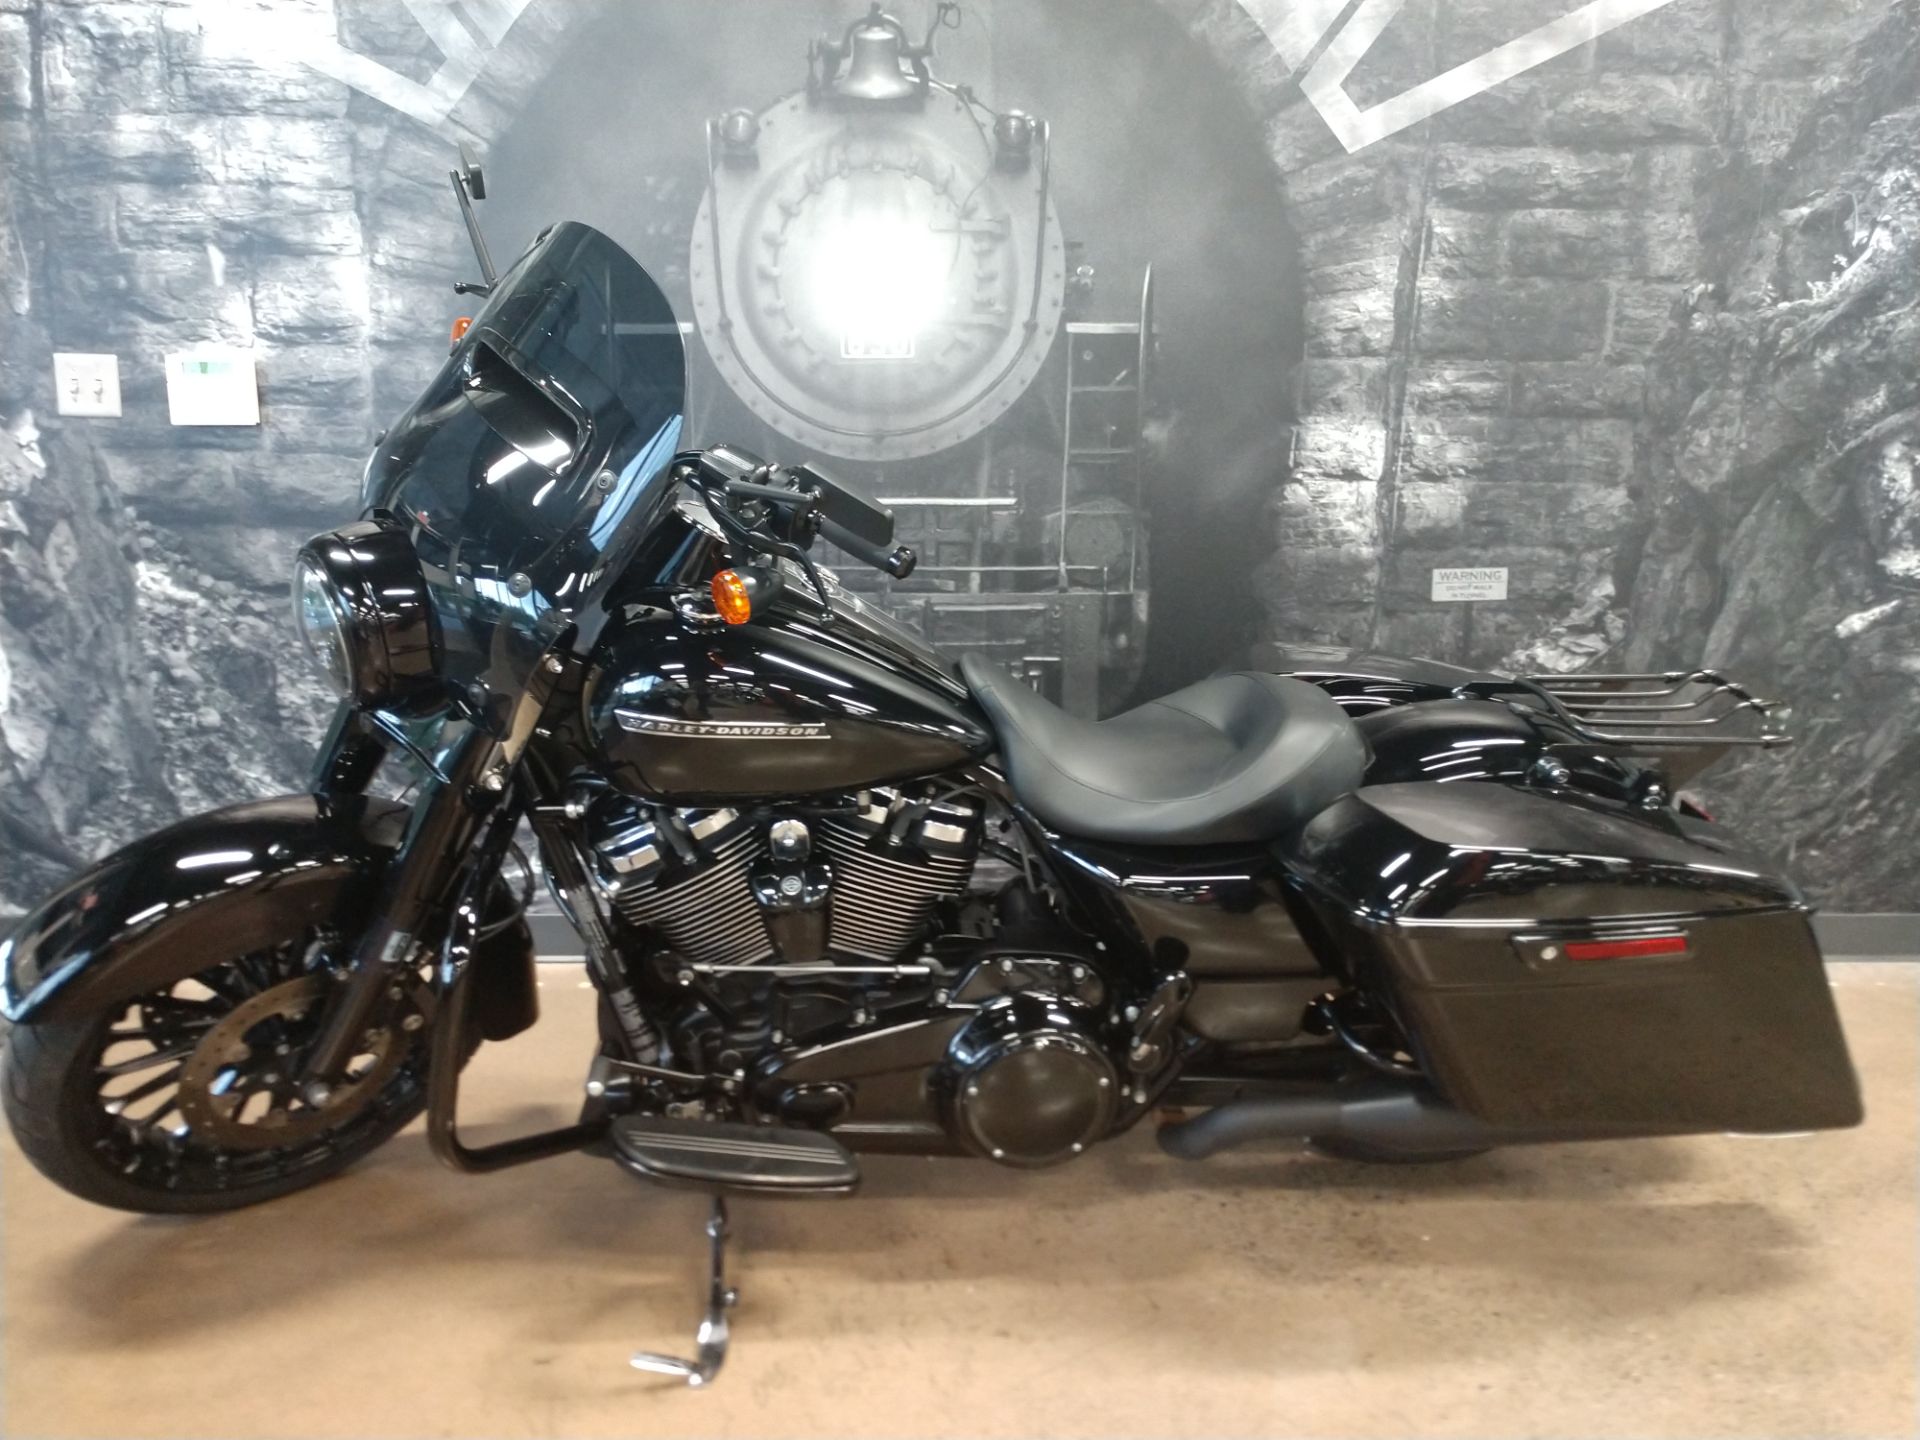 Used 2018 Harley Davidson Road King Special Motorcycles In Duncansville Pa 626263 Vivid Black